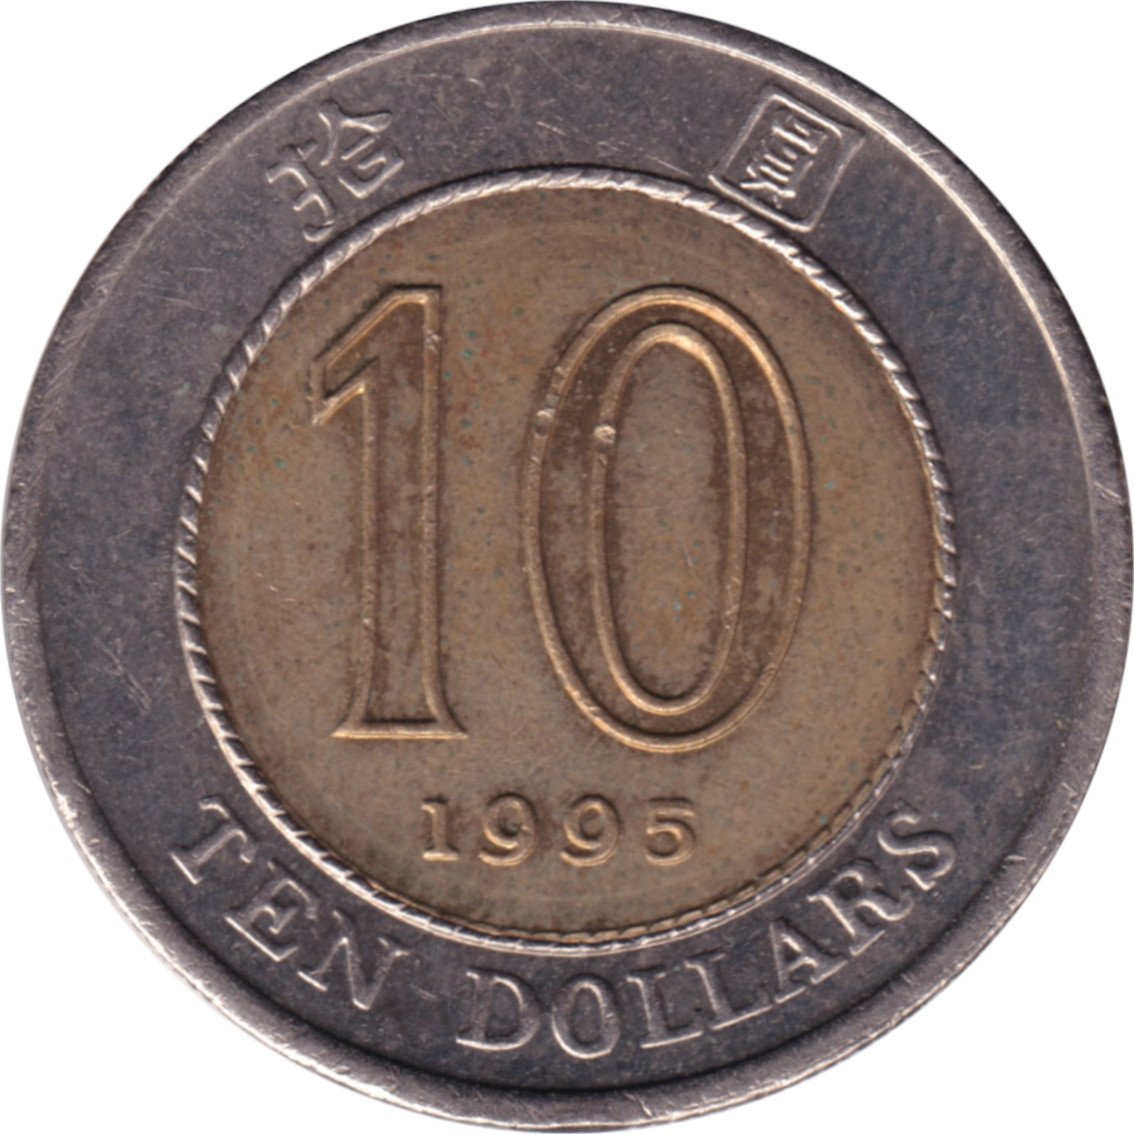 10 dollars - Fleur de Bauhinia